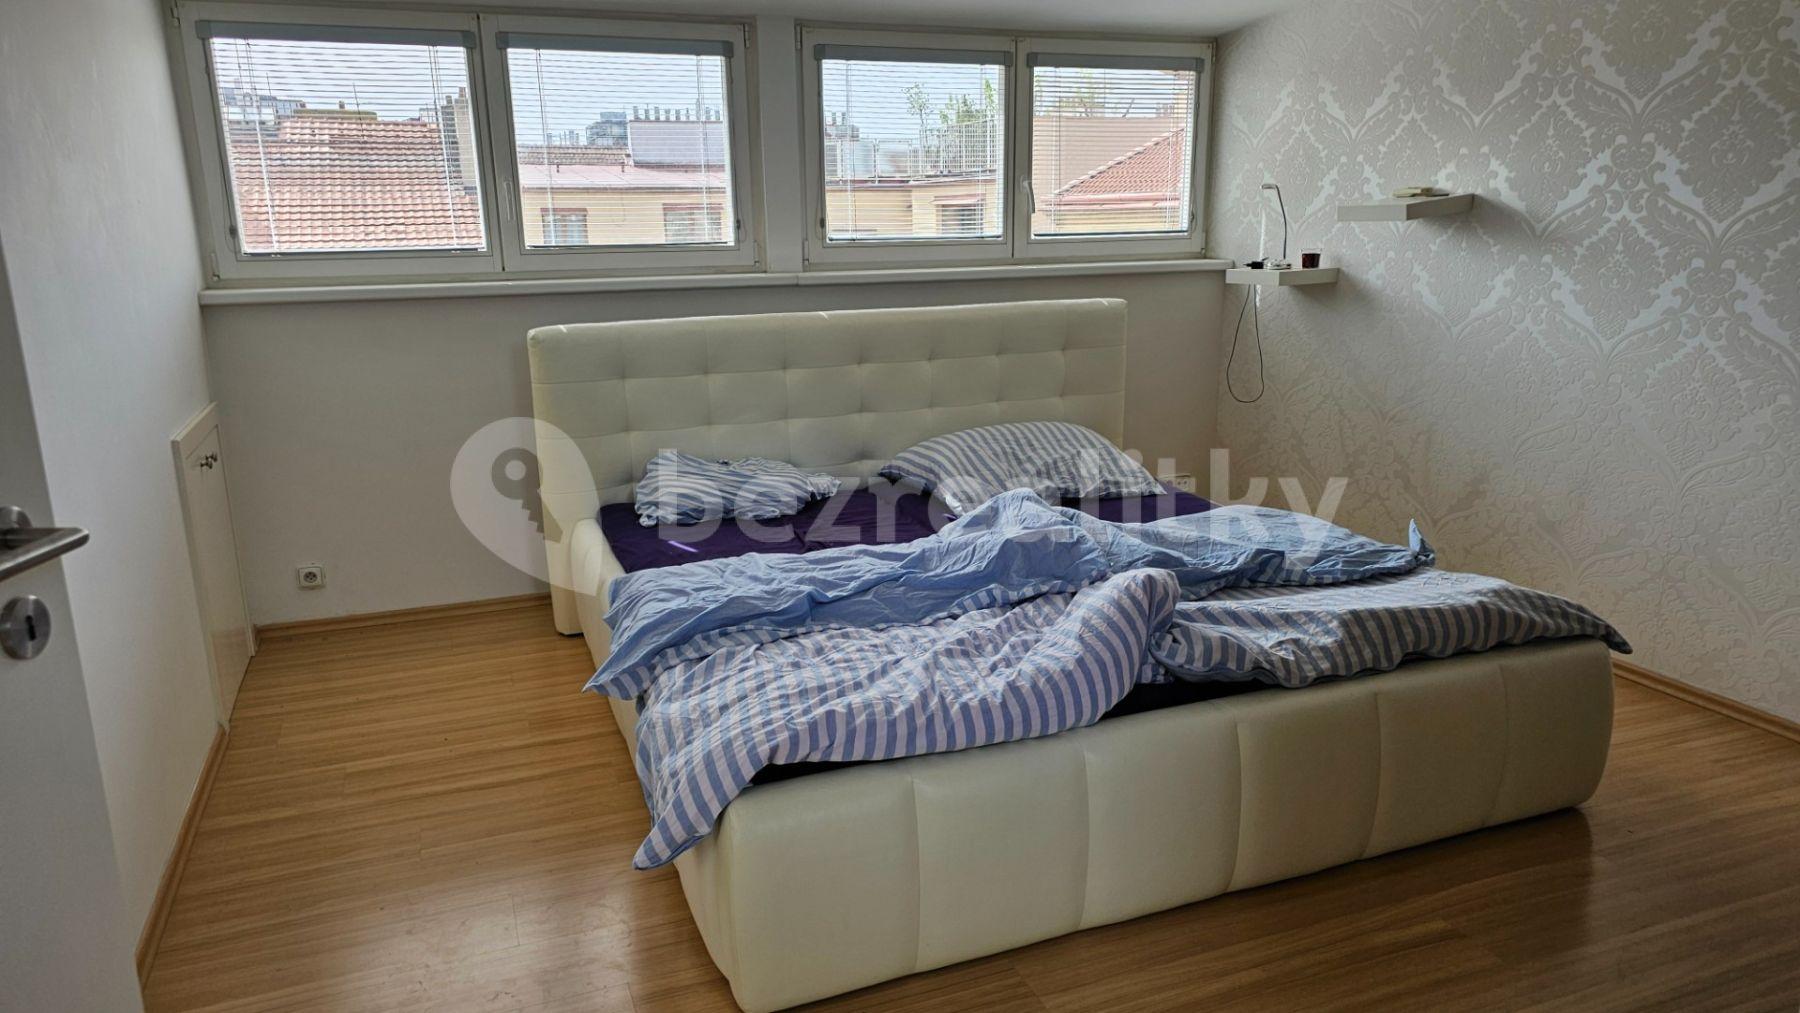 1 bedroom with open-plan kitchen flat to rent, 67 m², Roháčova, Prague, Prague